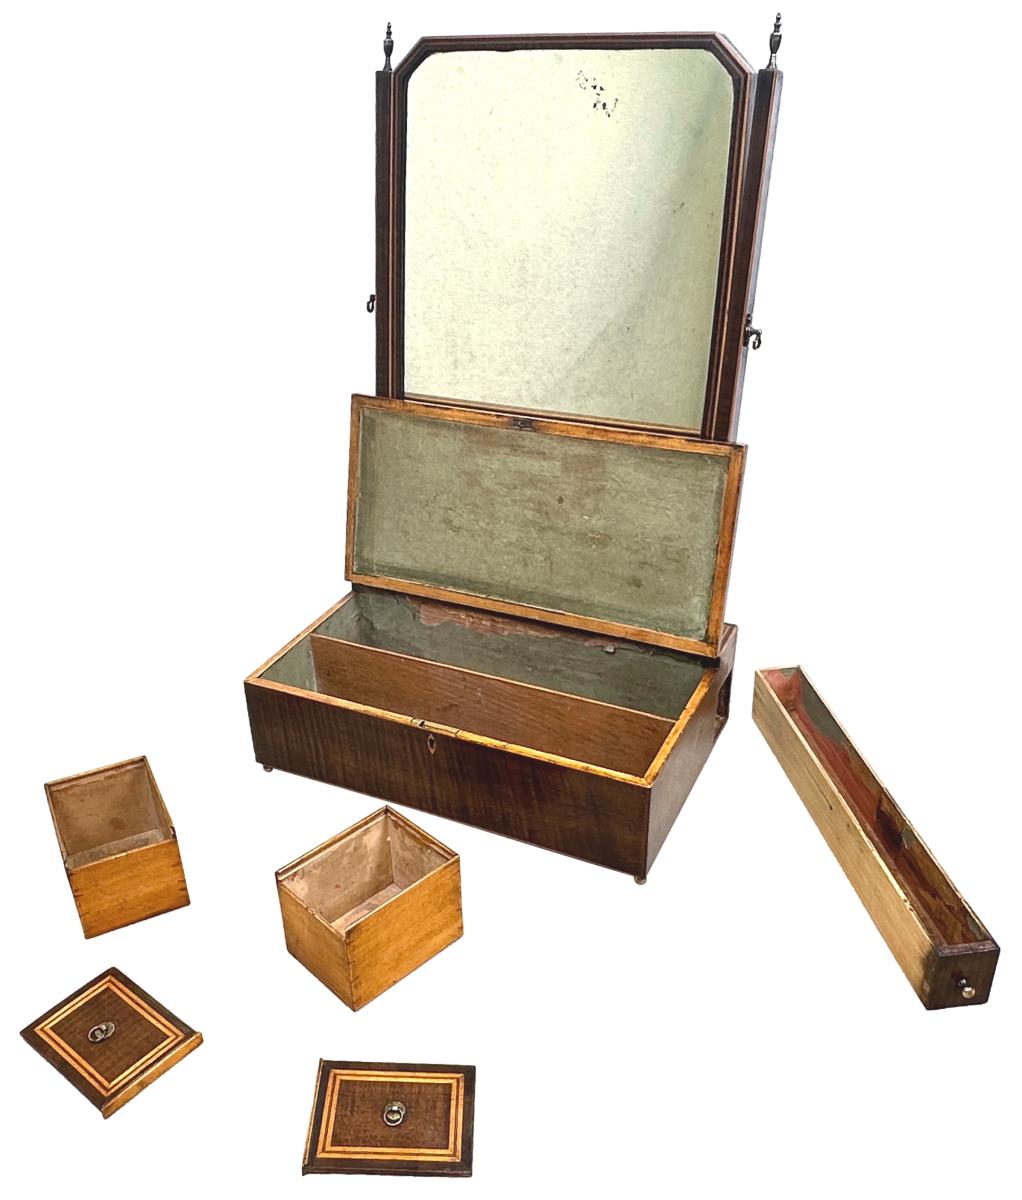 Rare 18th Century Harewood Dressing Table Mirror